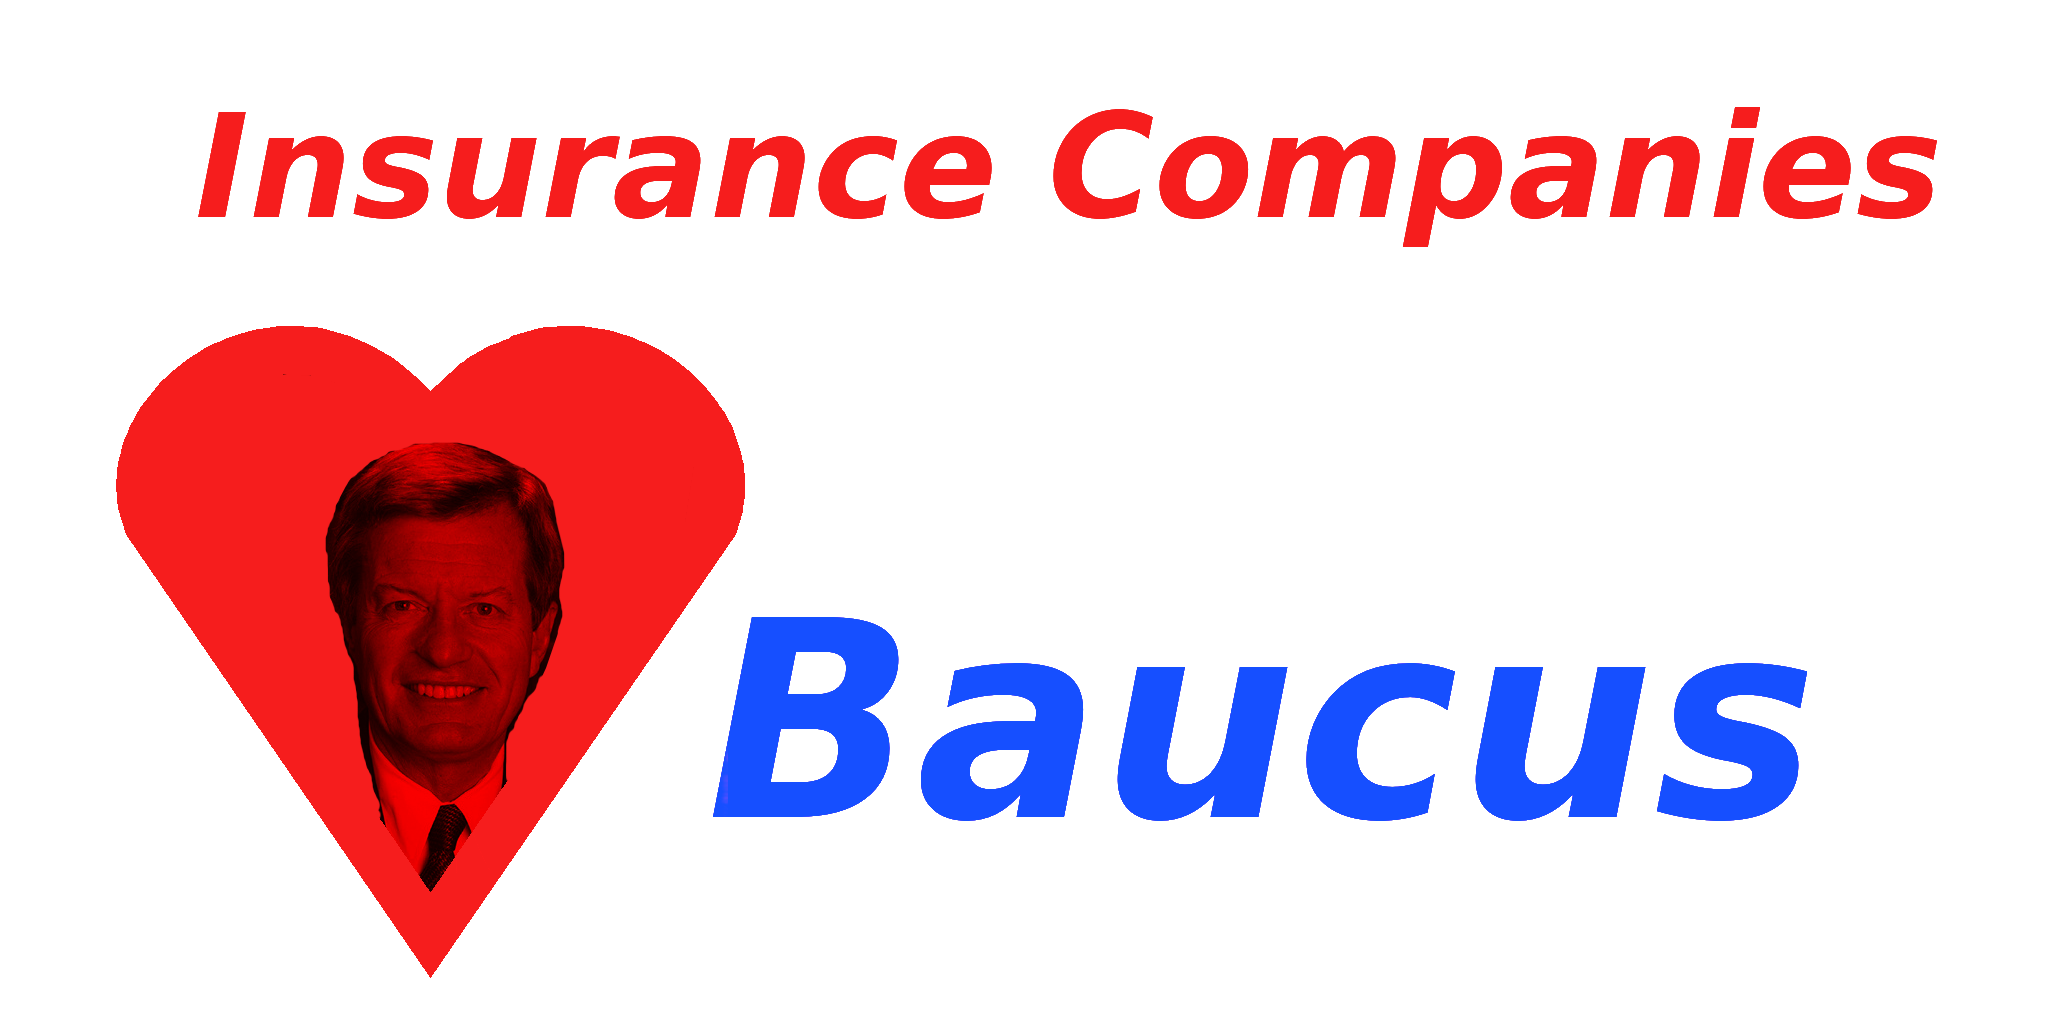 Insurance Companies Love Baucus